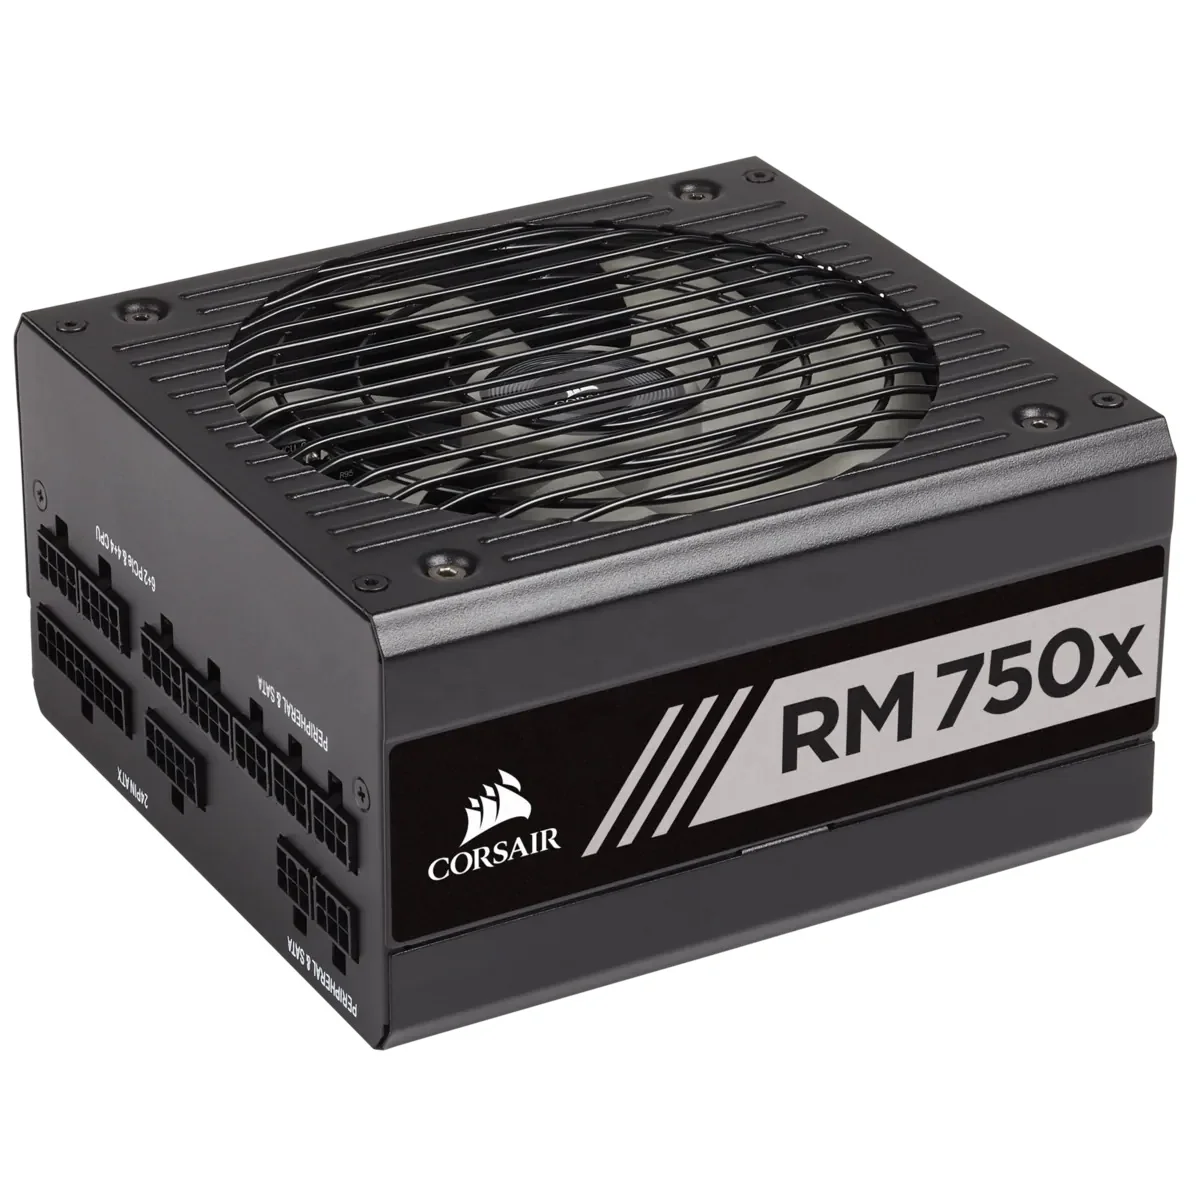 

RMx Series RM750x 750 Watt 80 PLUS computer power supply Gold Certified Fully Modular PSU (EU)